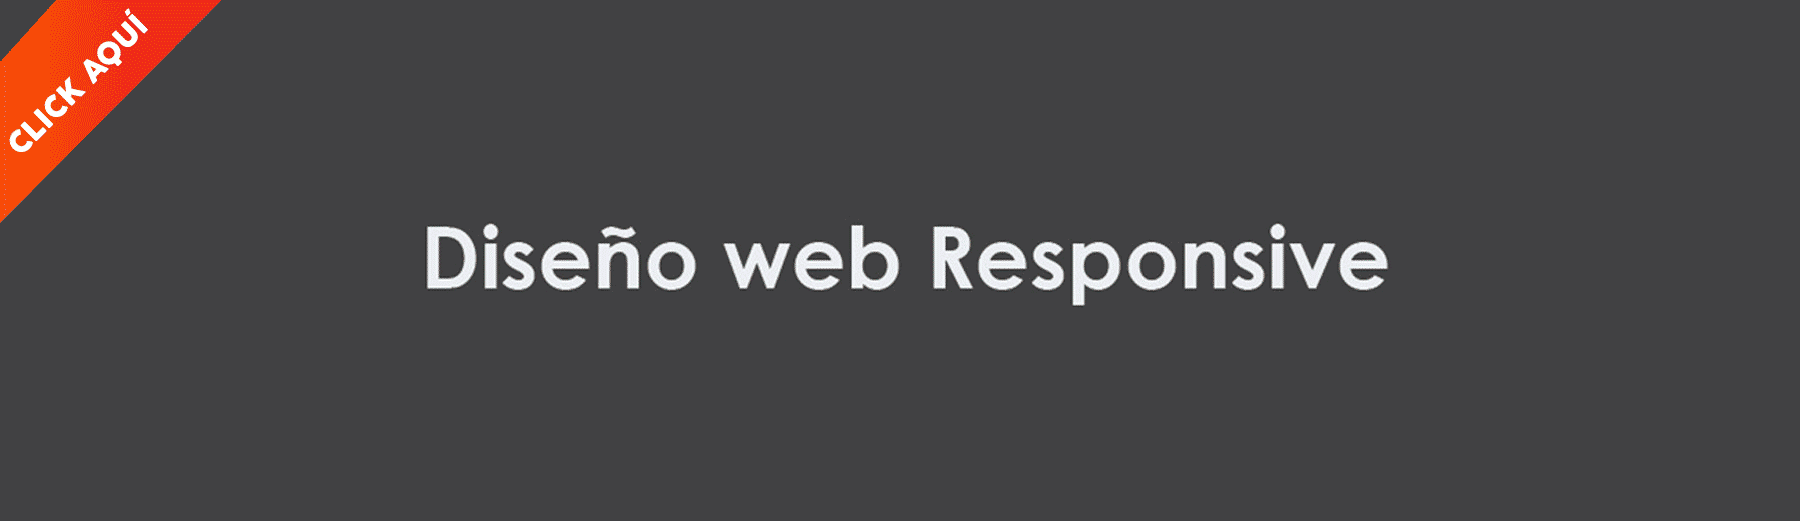 diseno web responsive